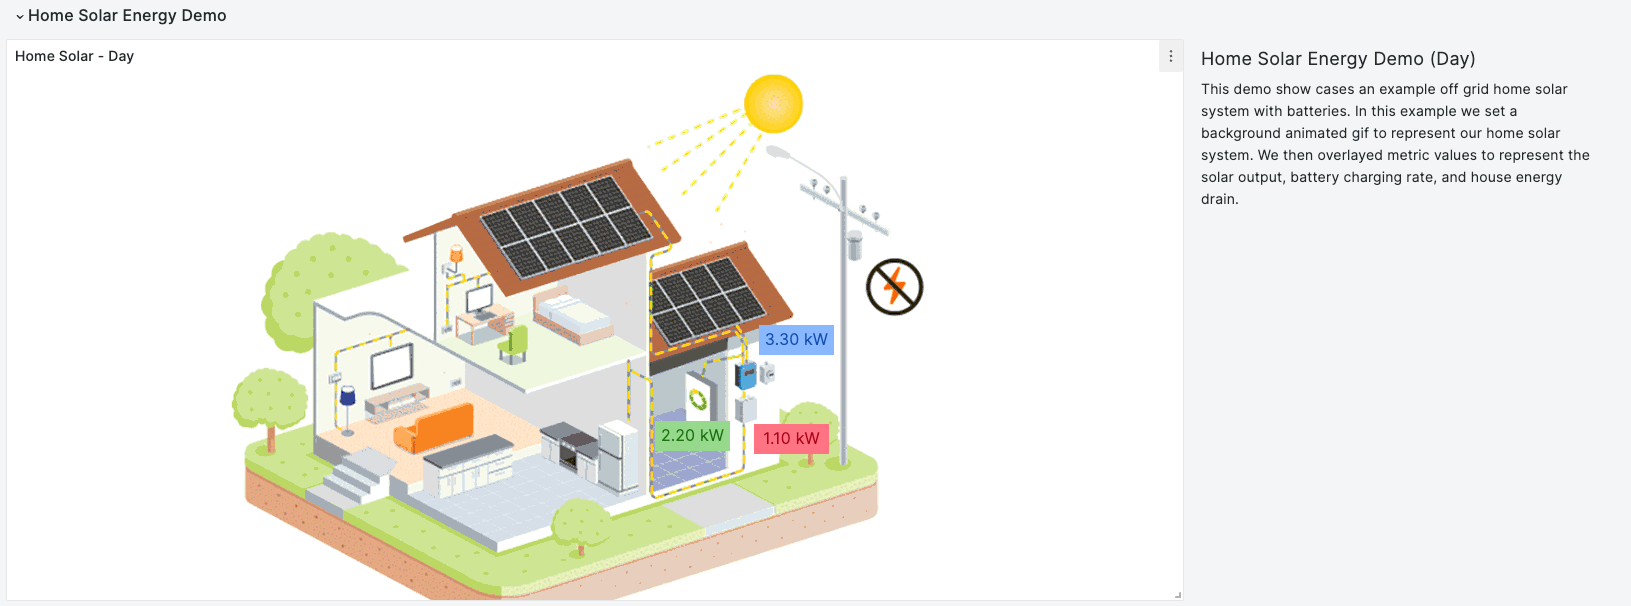 Grafana canvas home solar energy demo screenshot